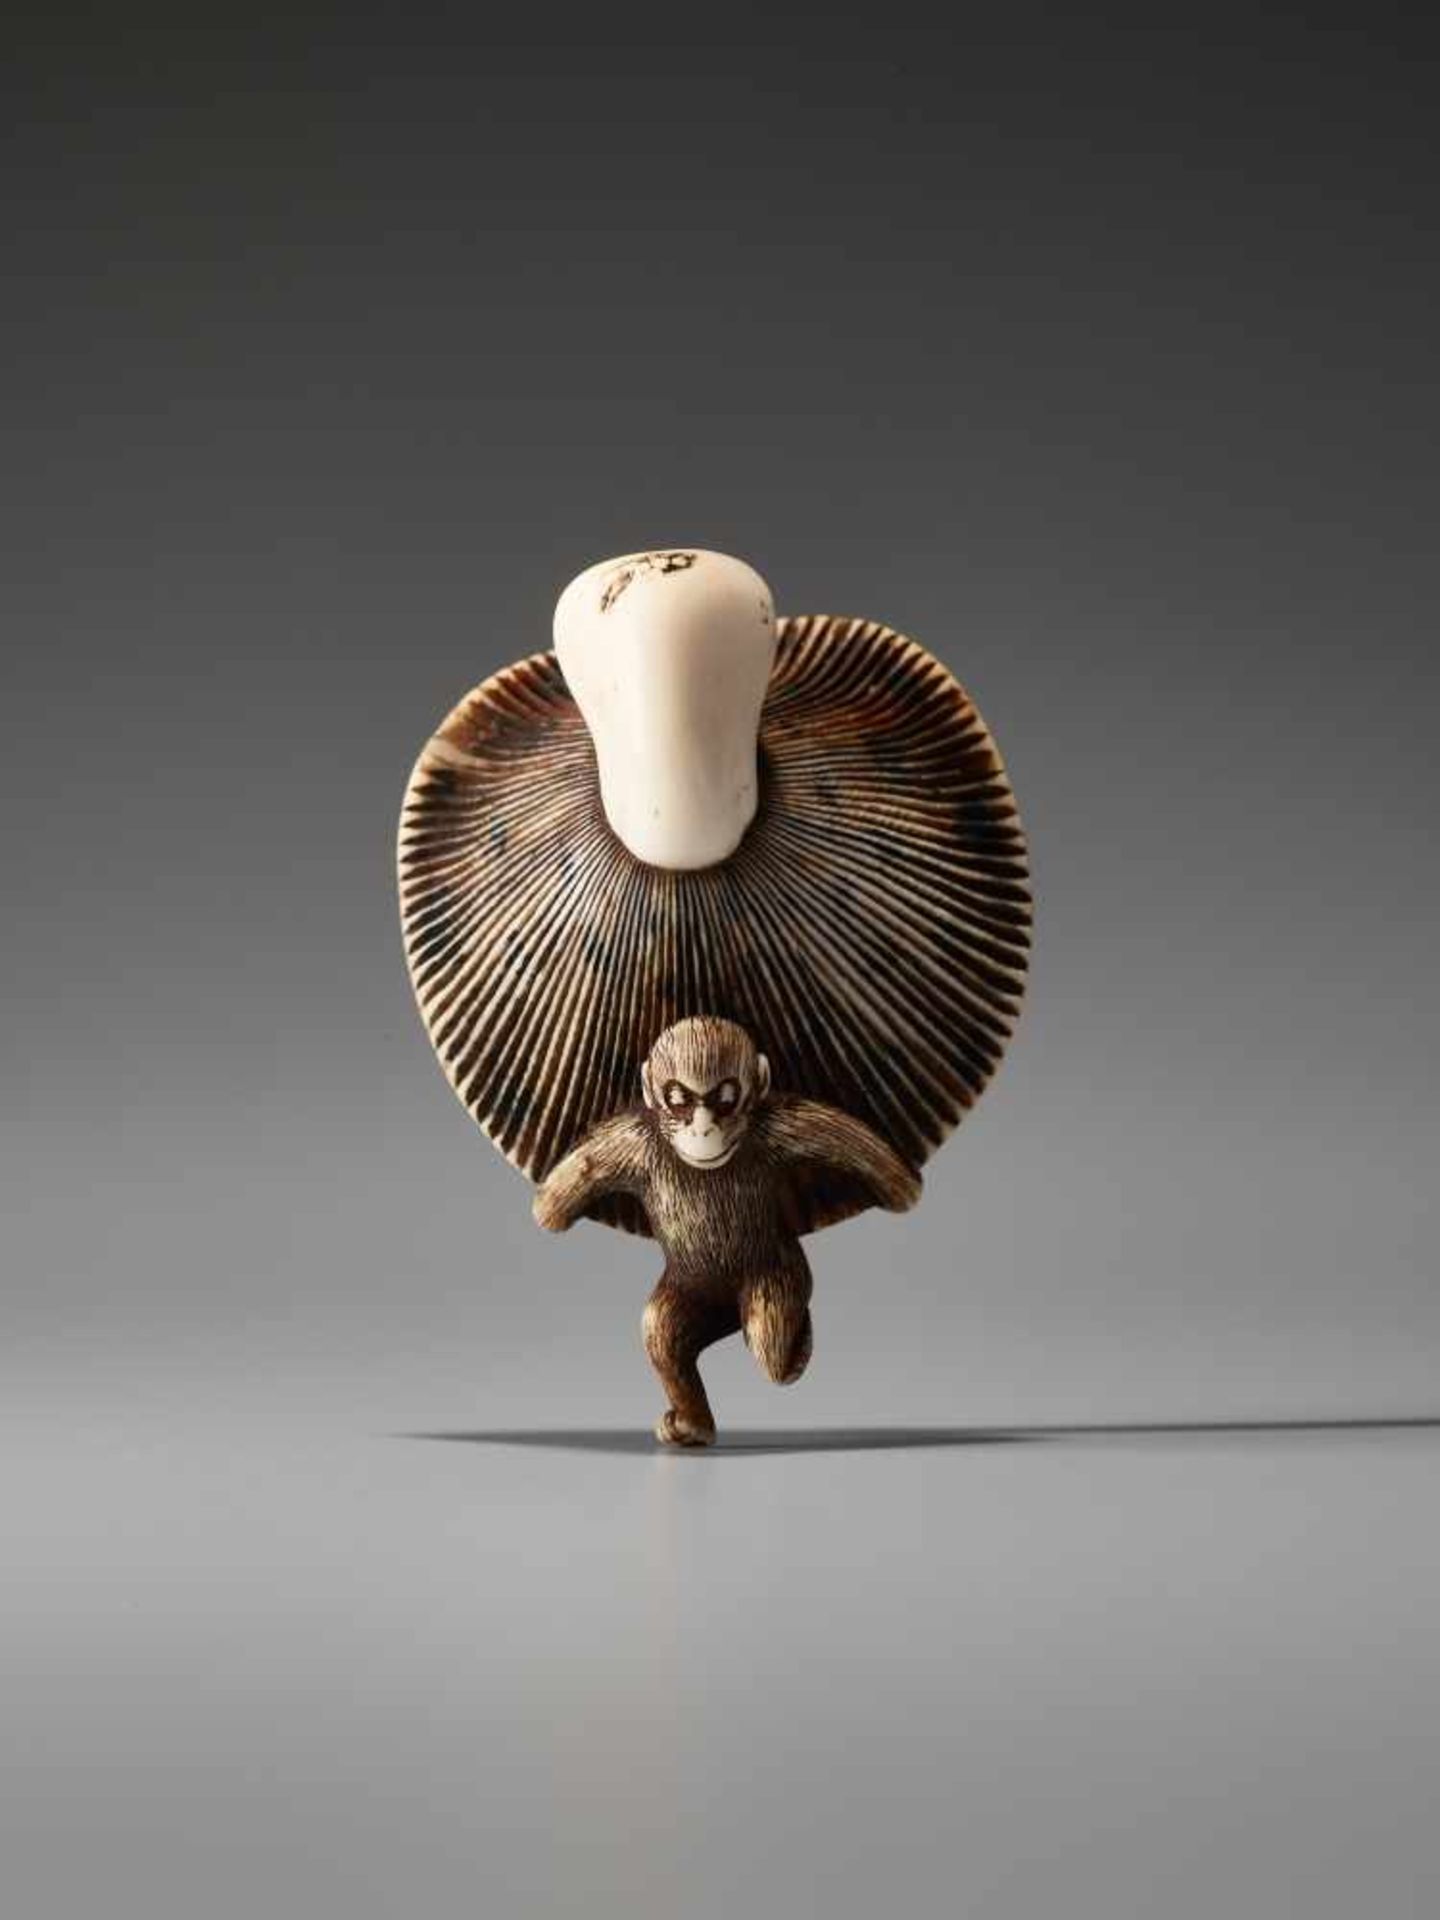 AN AMUSING IVORY NETSUKE OF A SMALL MONKEY CARRYING A LARGE MUSHROOMUnsigned, ivory netsukeJapan,